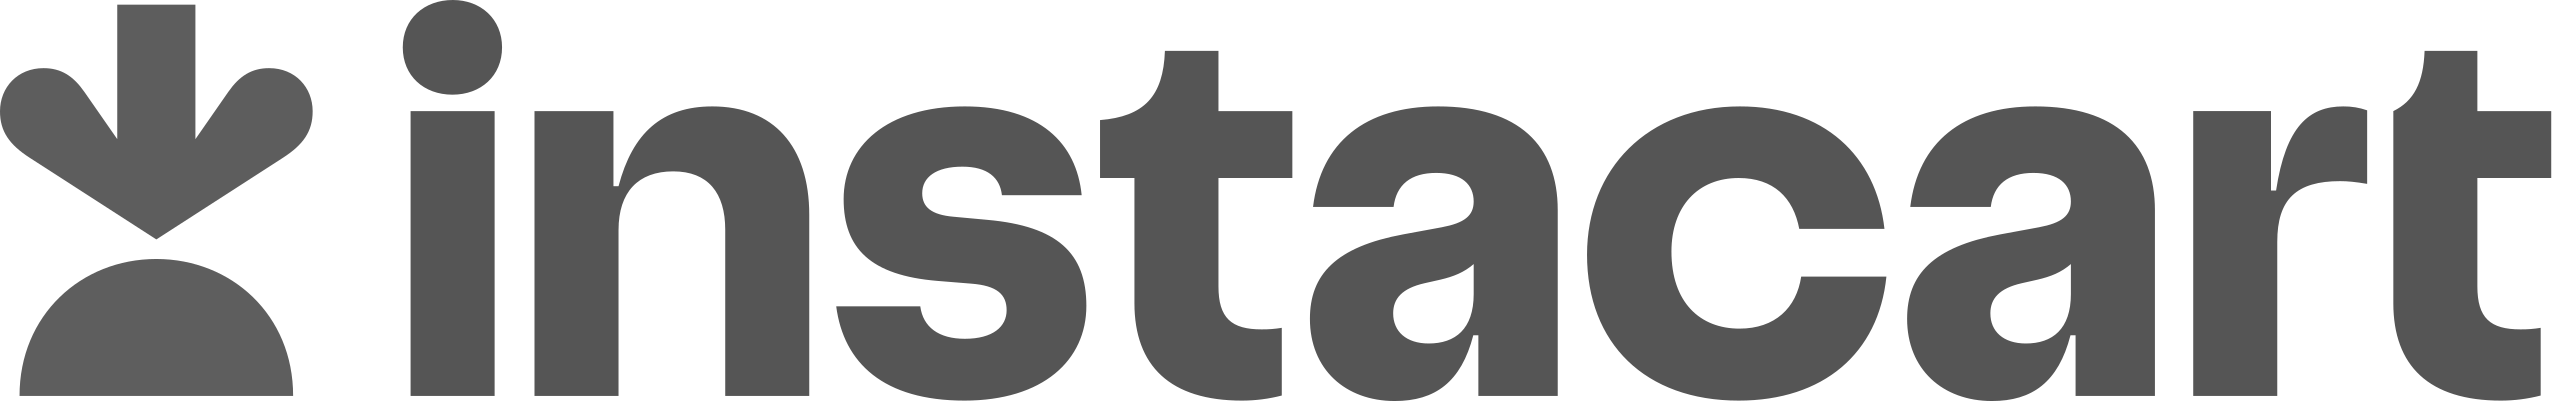 Instacart_Logo